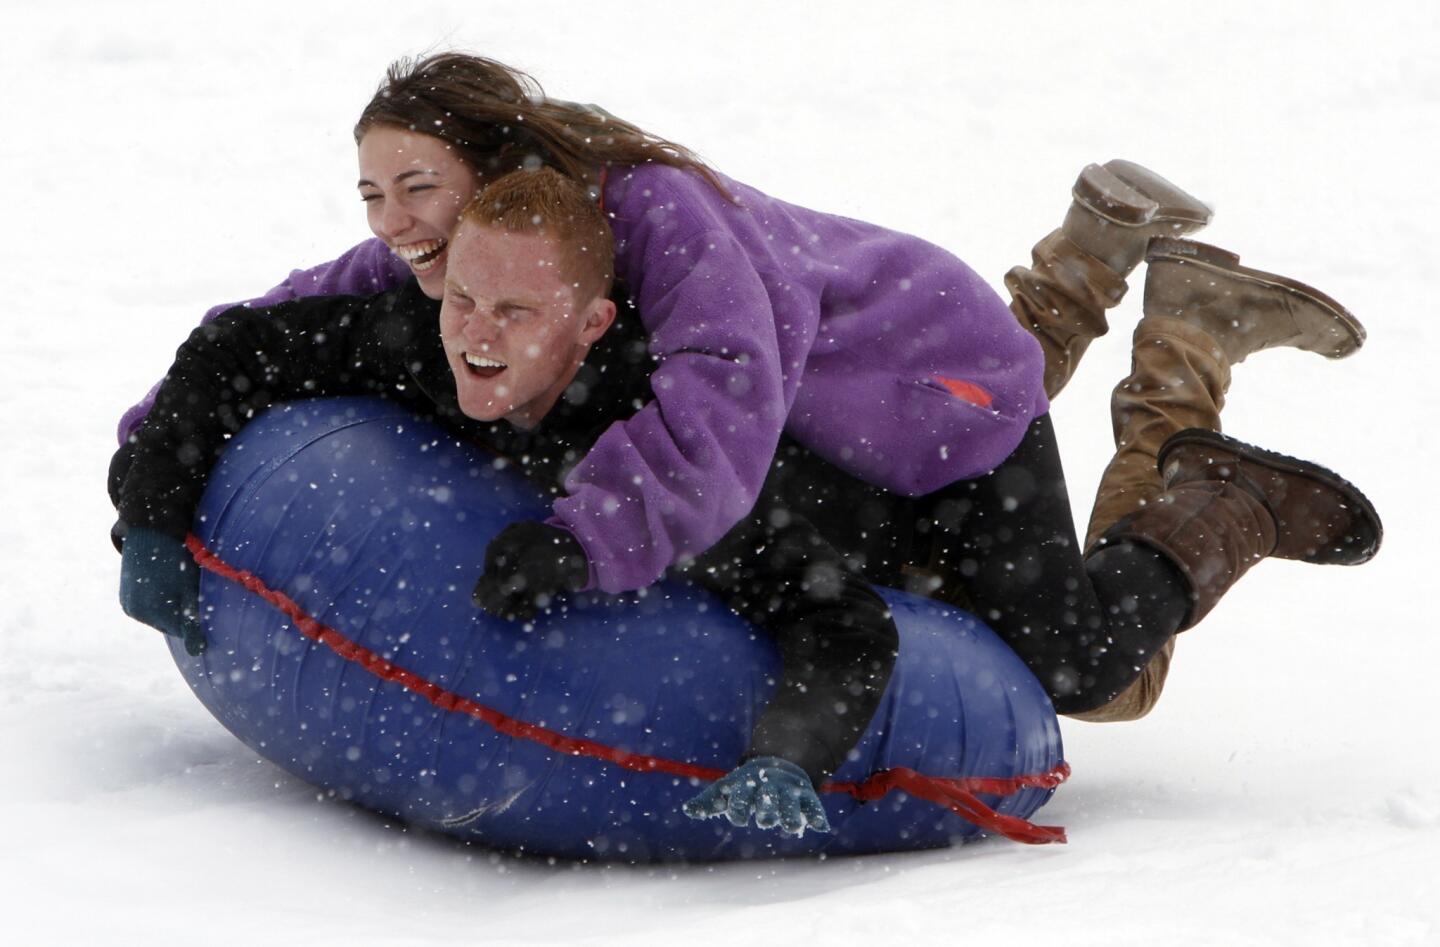 Jonah Lavin, 19, and girlfriend Sascha Spiegel 18, enjoy sledding at Big Bear Snow Play.